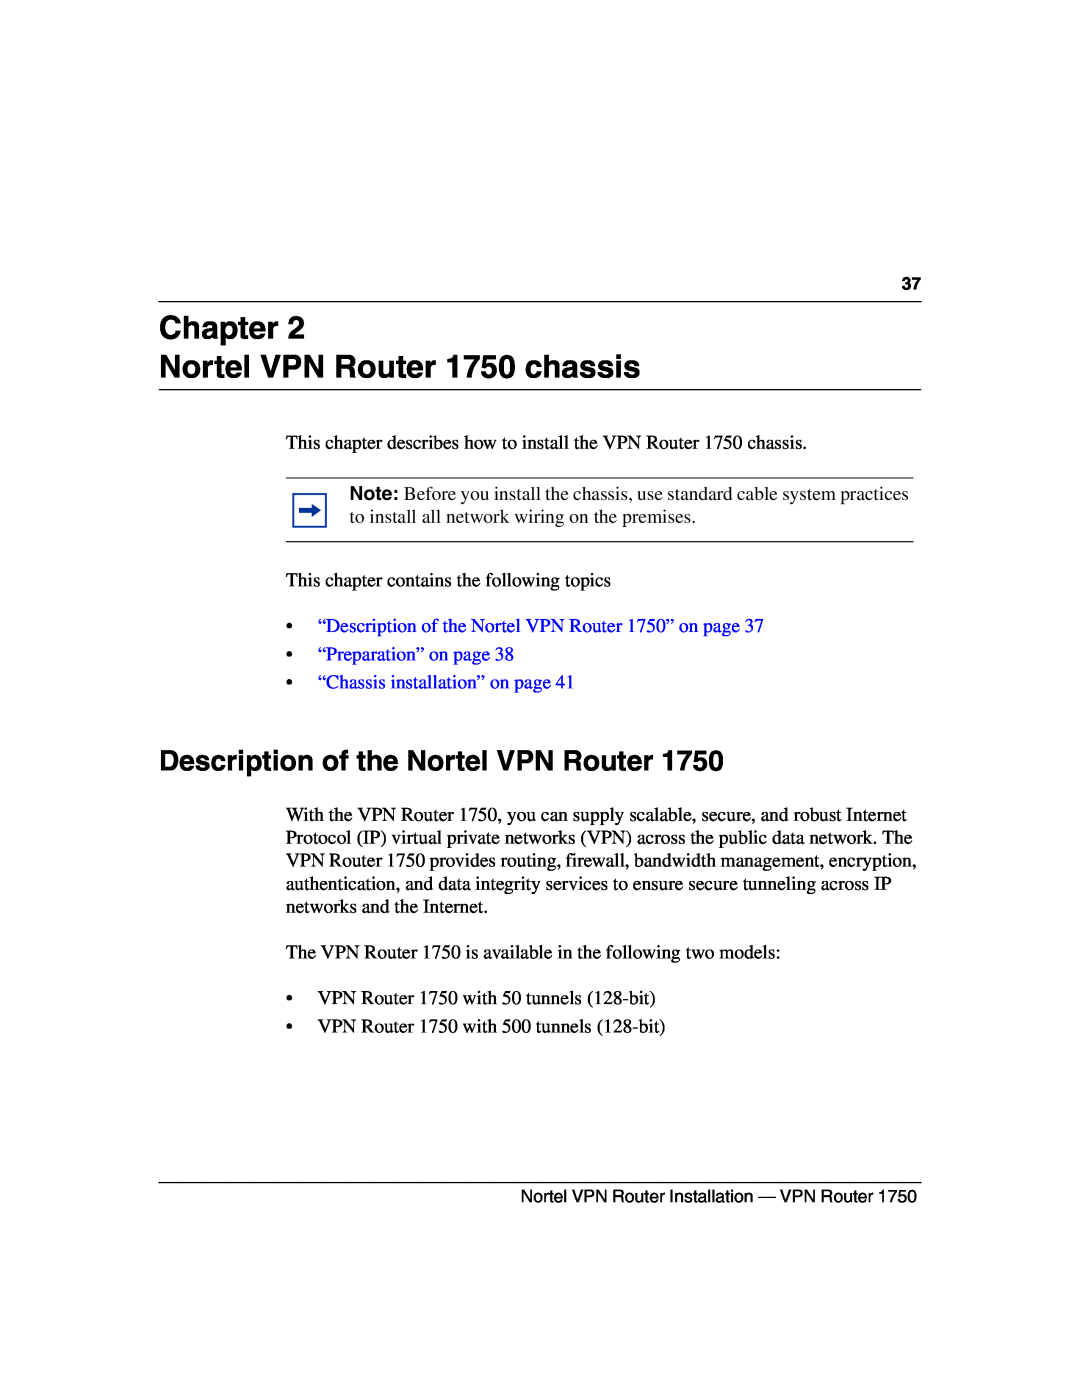 Nortel Networks manual Chapter Nortel VPN Router 1750 chassis, Description of the Nortel VPN Router 